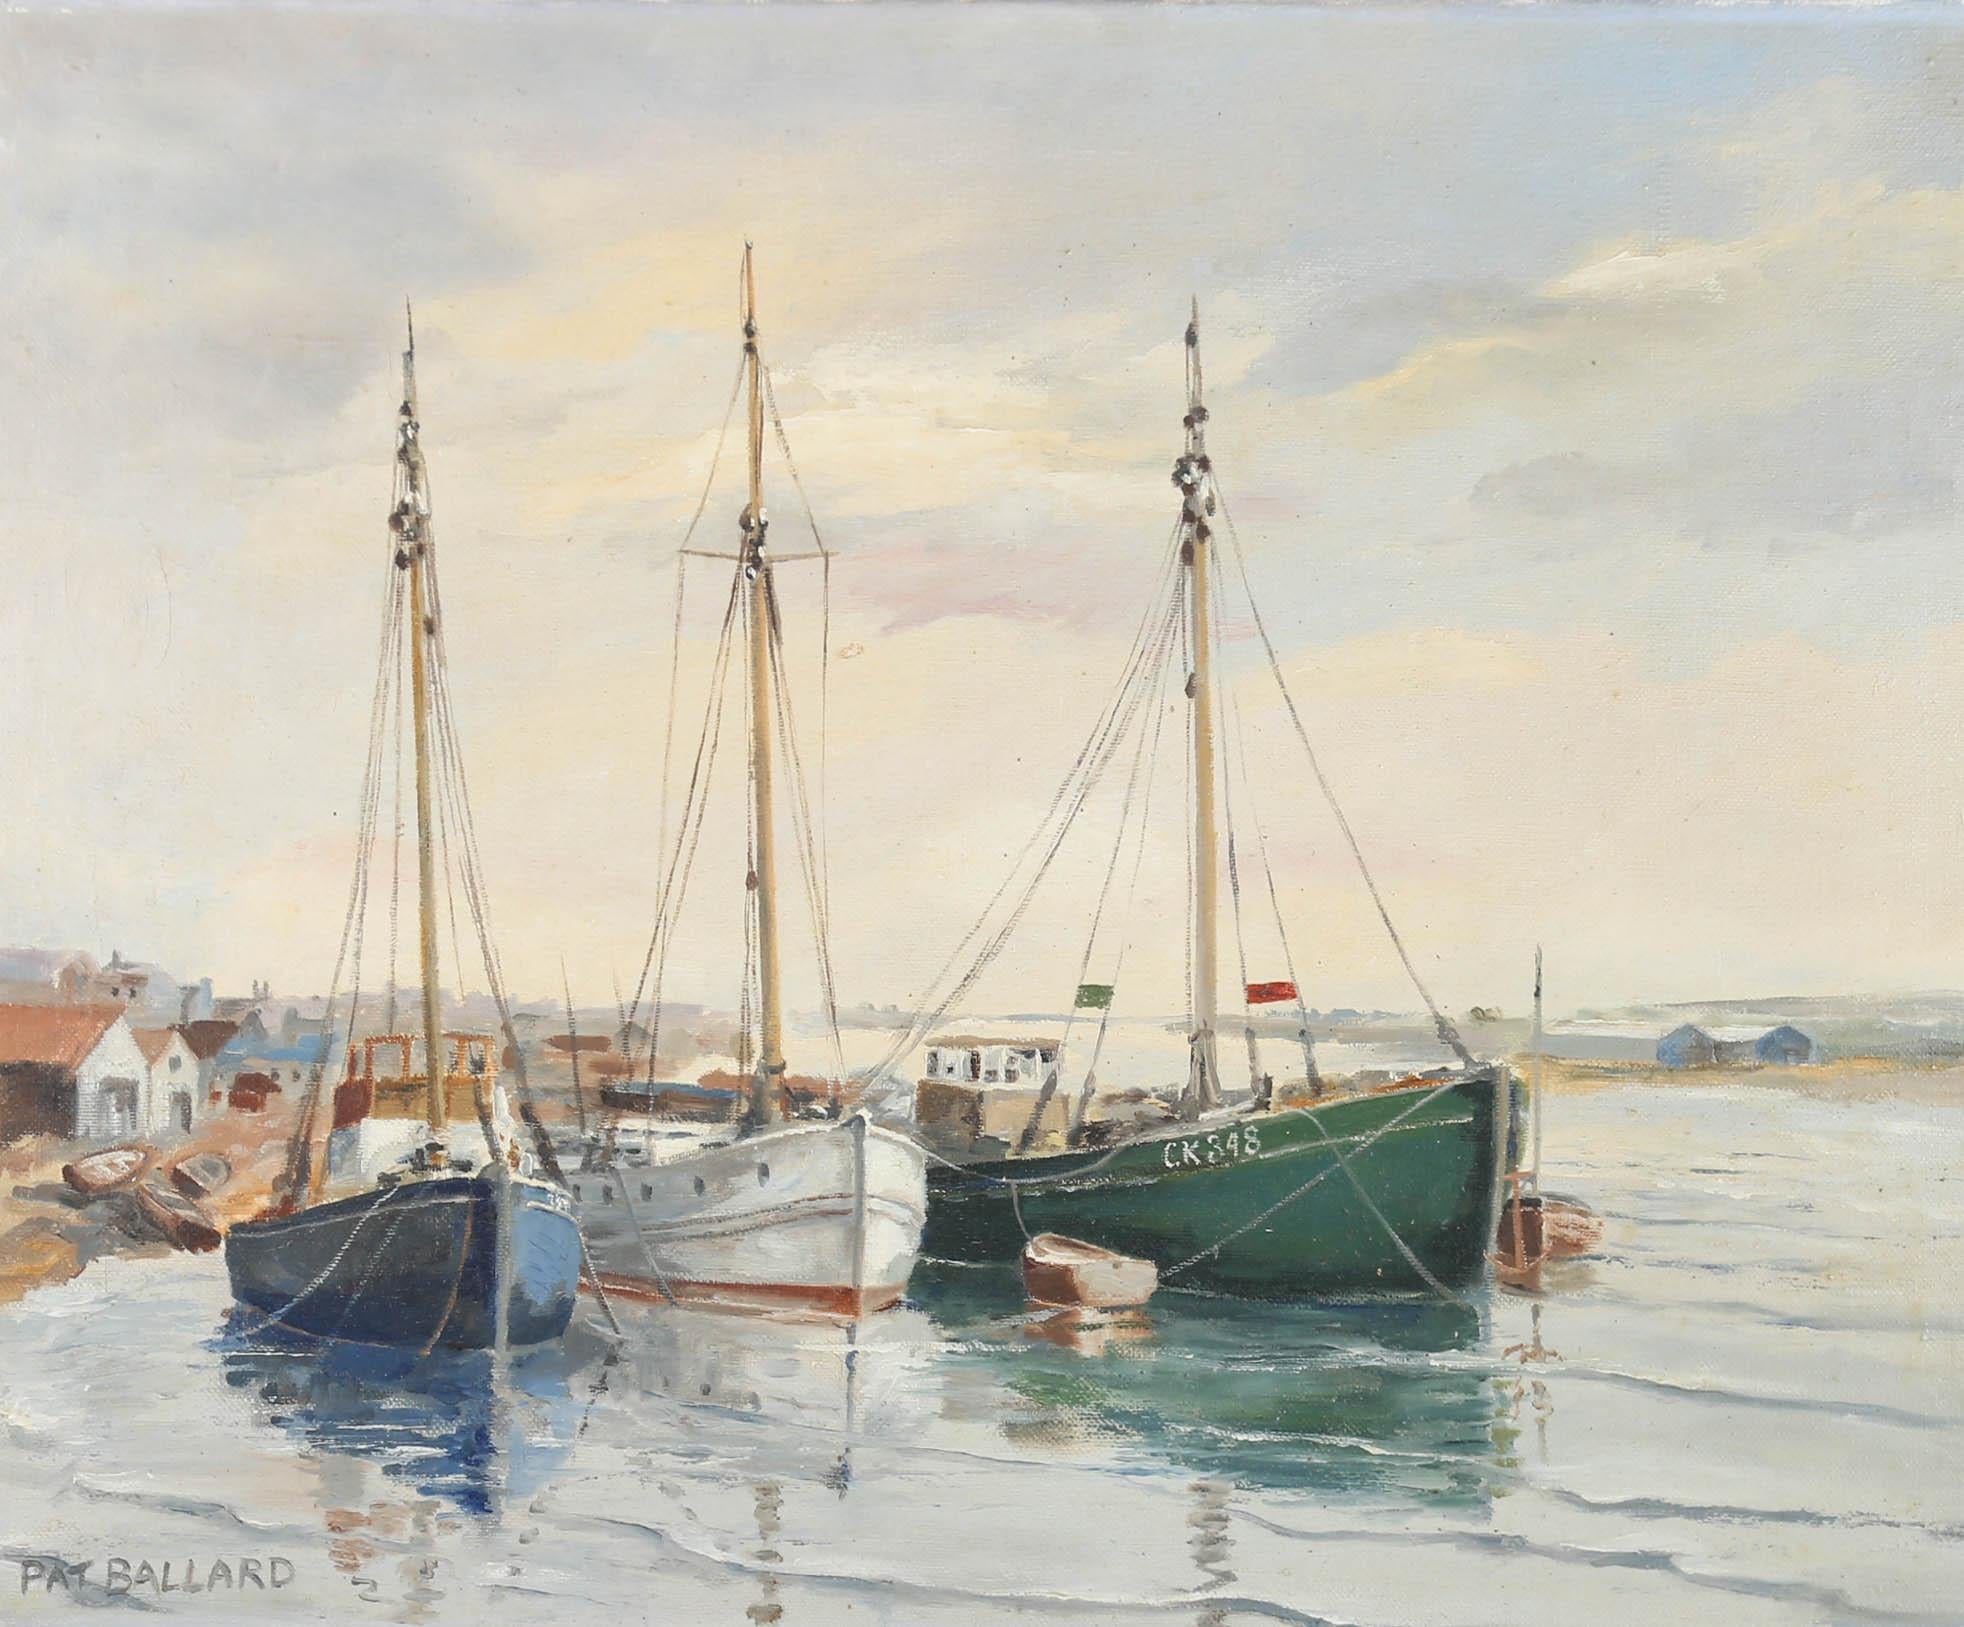 Pat Ballard - 20th Century Oil, Three Fishing Boats